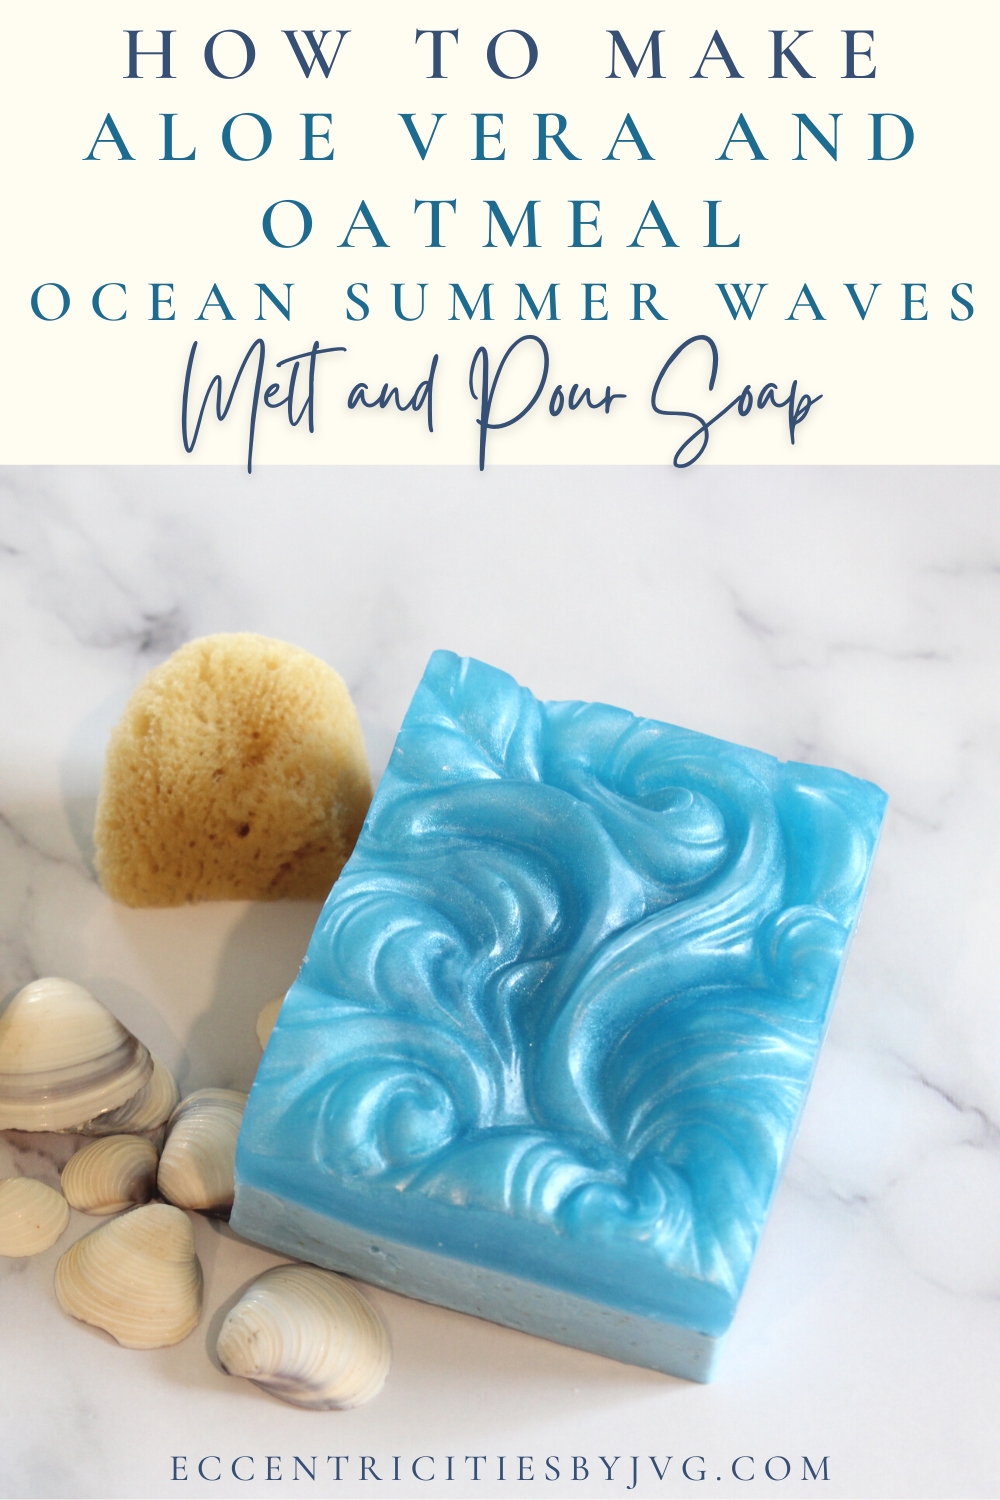 Ocean Summer Waves Melt and Pour Soap DIY